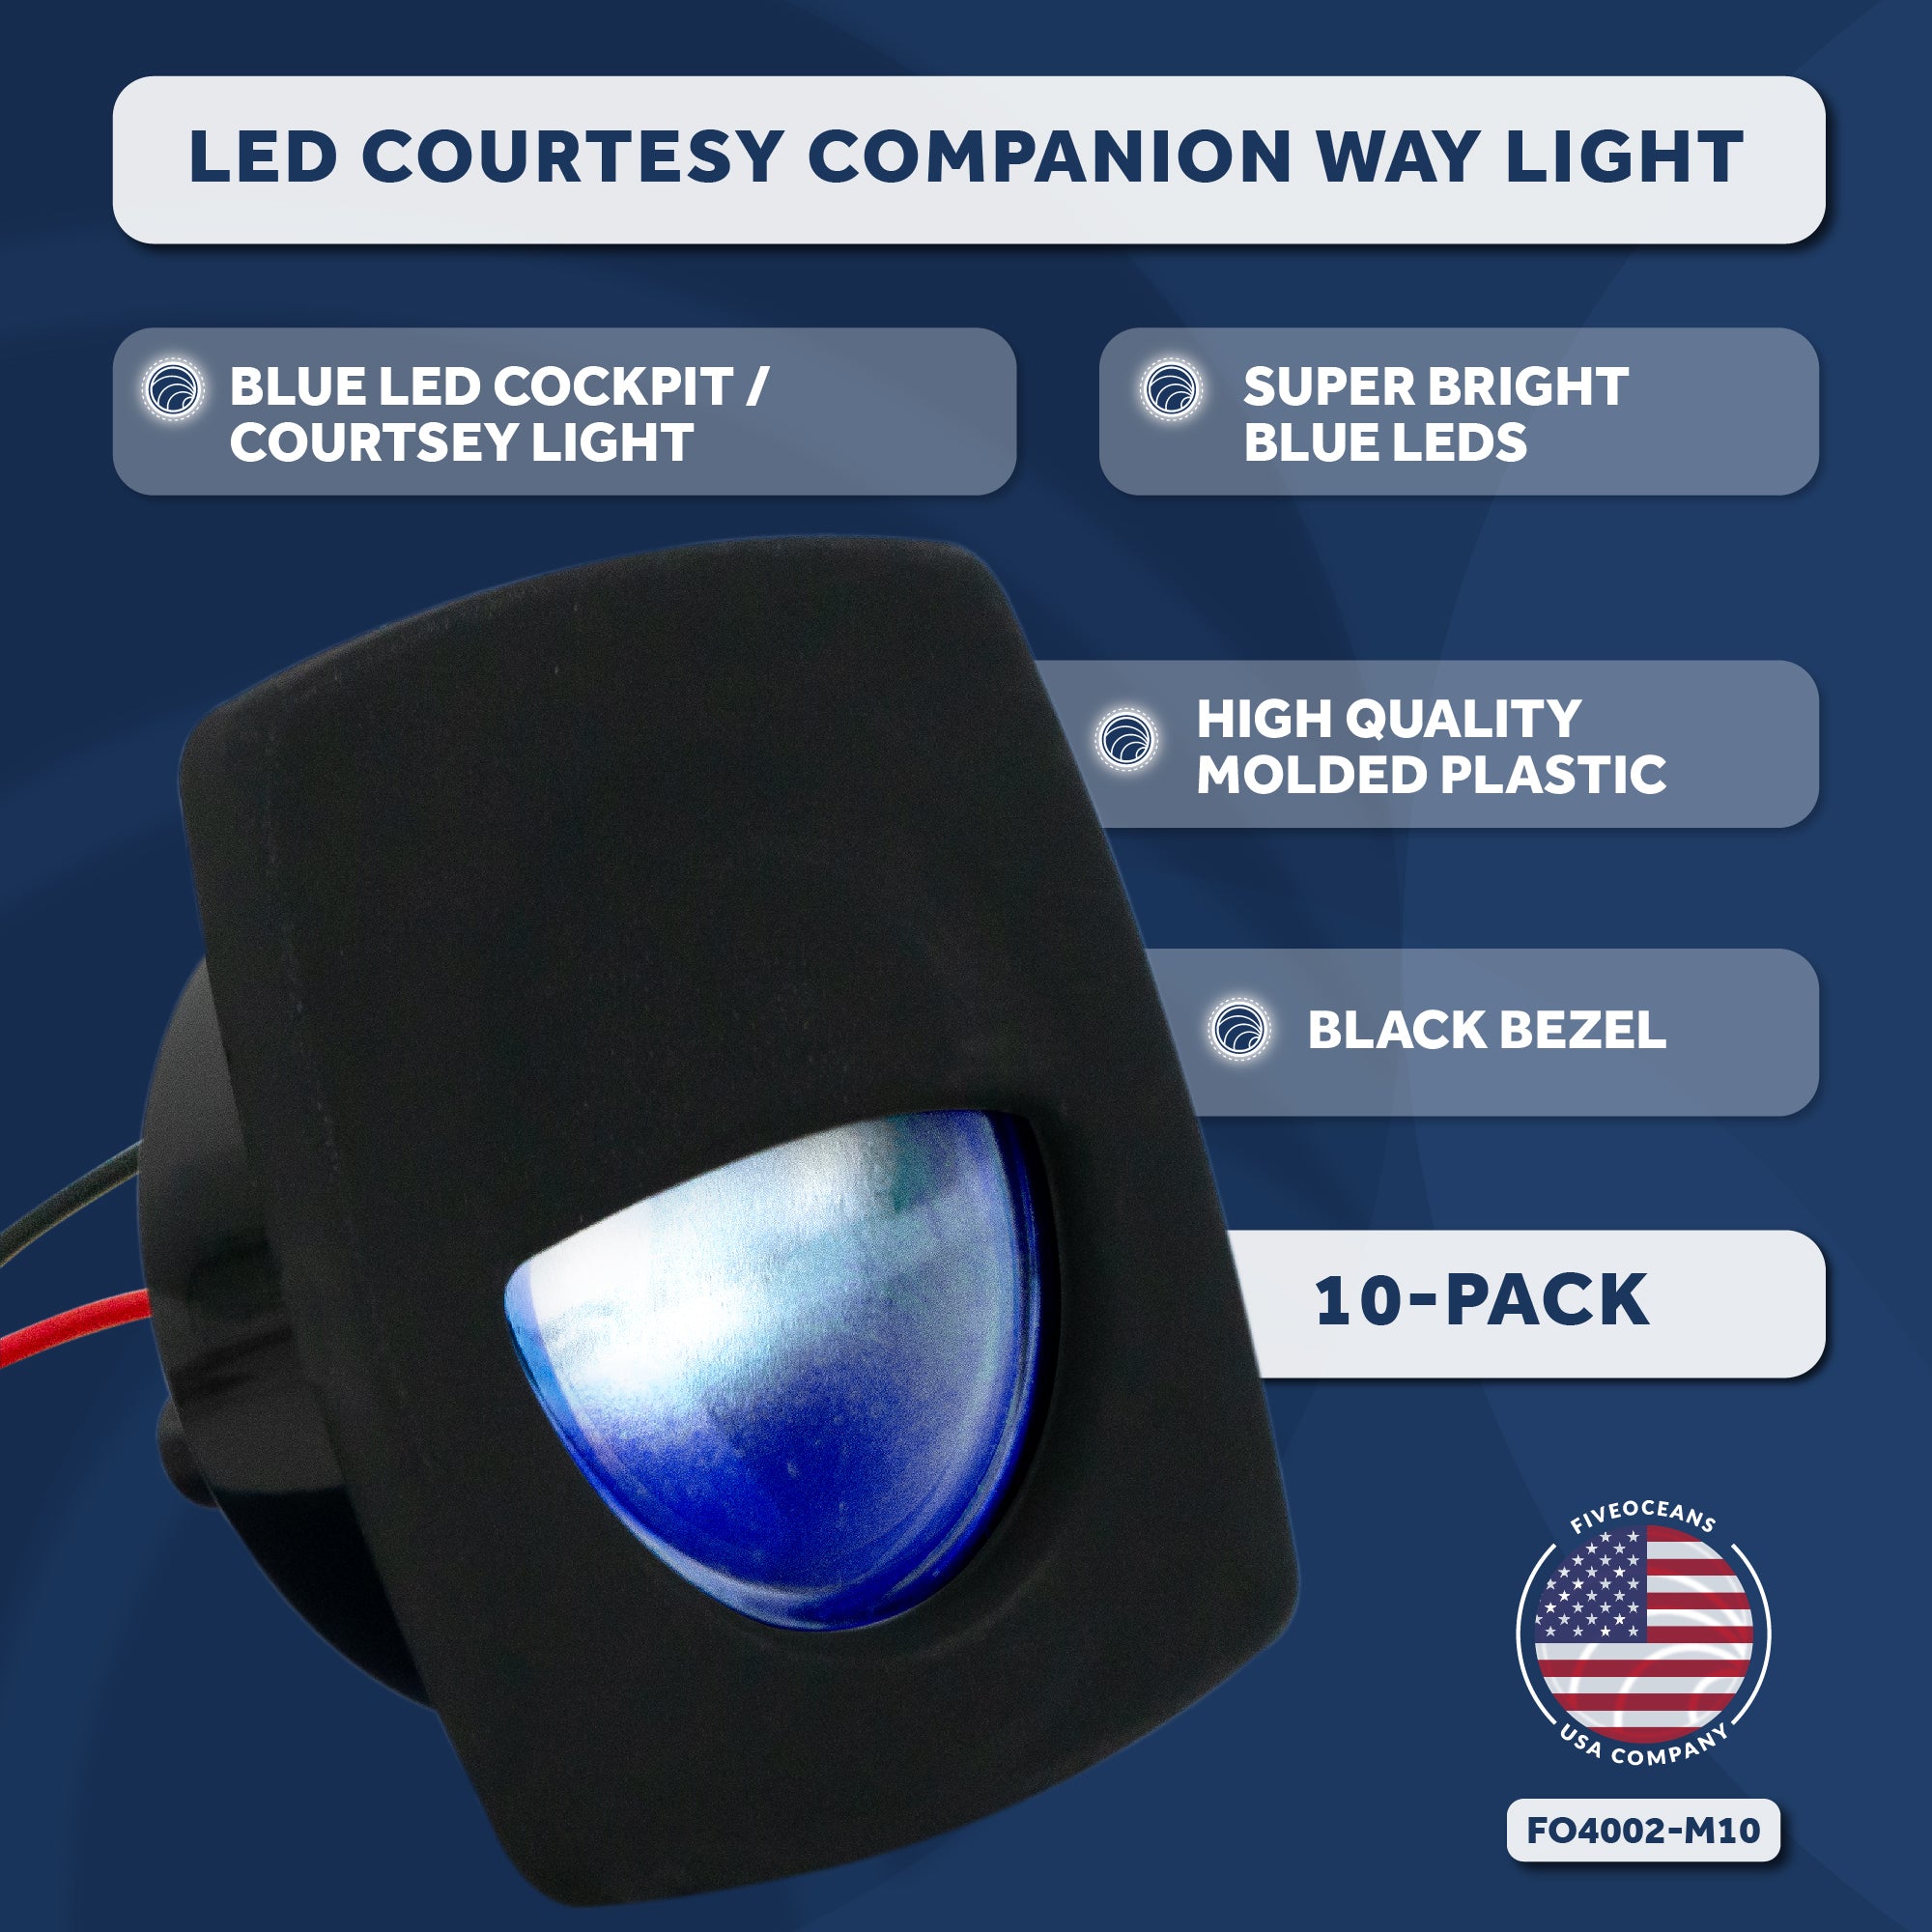 LED Courtesy Companion Way Light, Square, Blue light, 10-pack - FO4002-M10